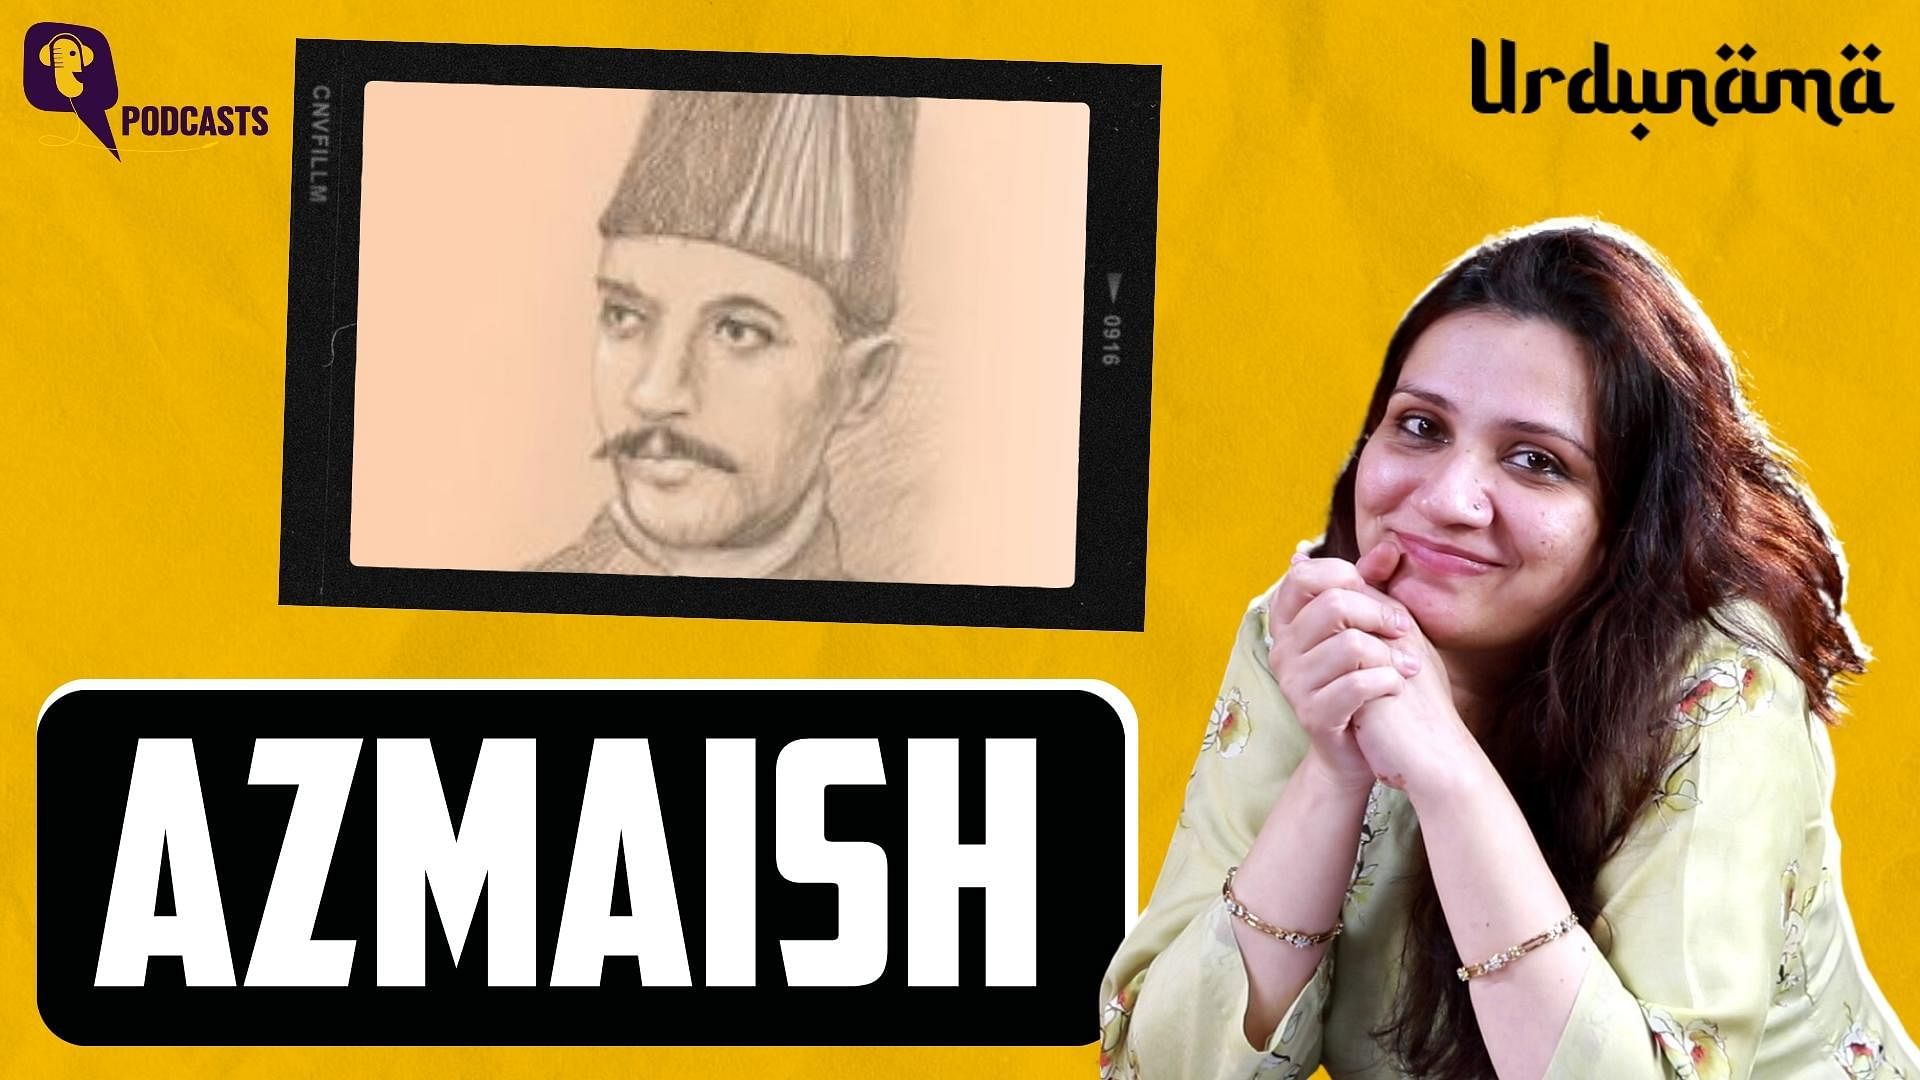 <div class="paragraphs"><p>In this episode, Fabeha talks about the Urdu word, 'Azmaish.'</p></div>